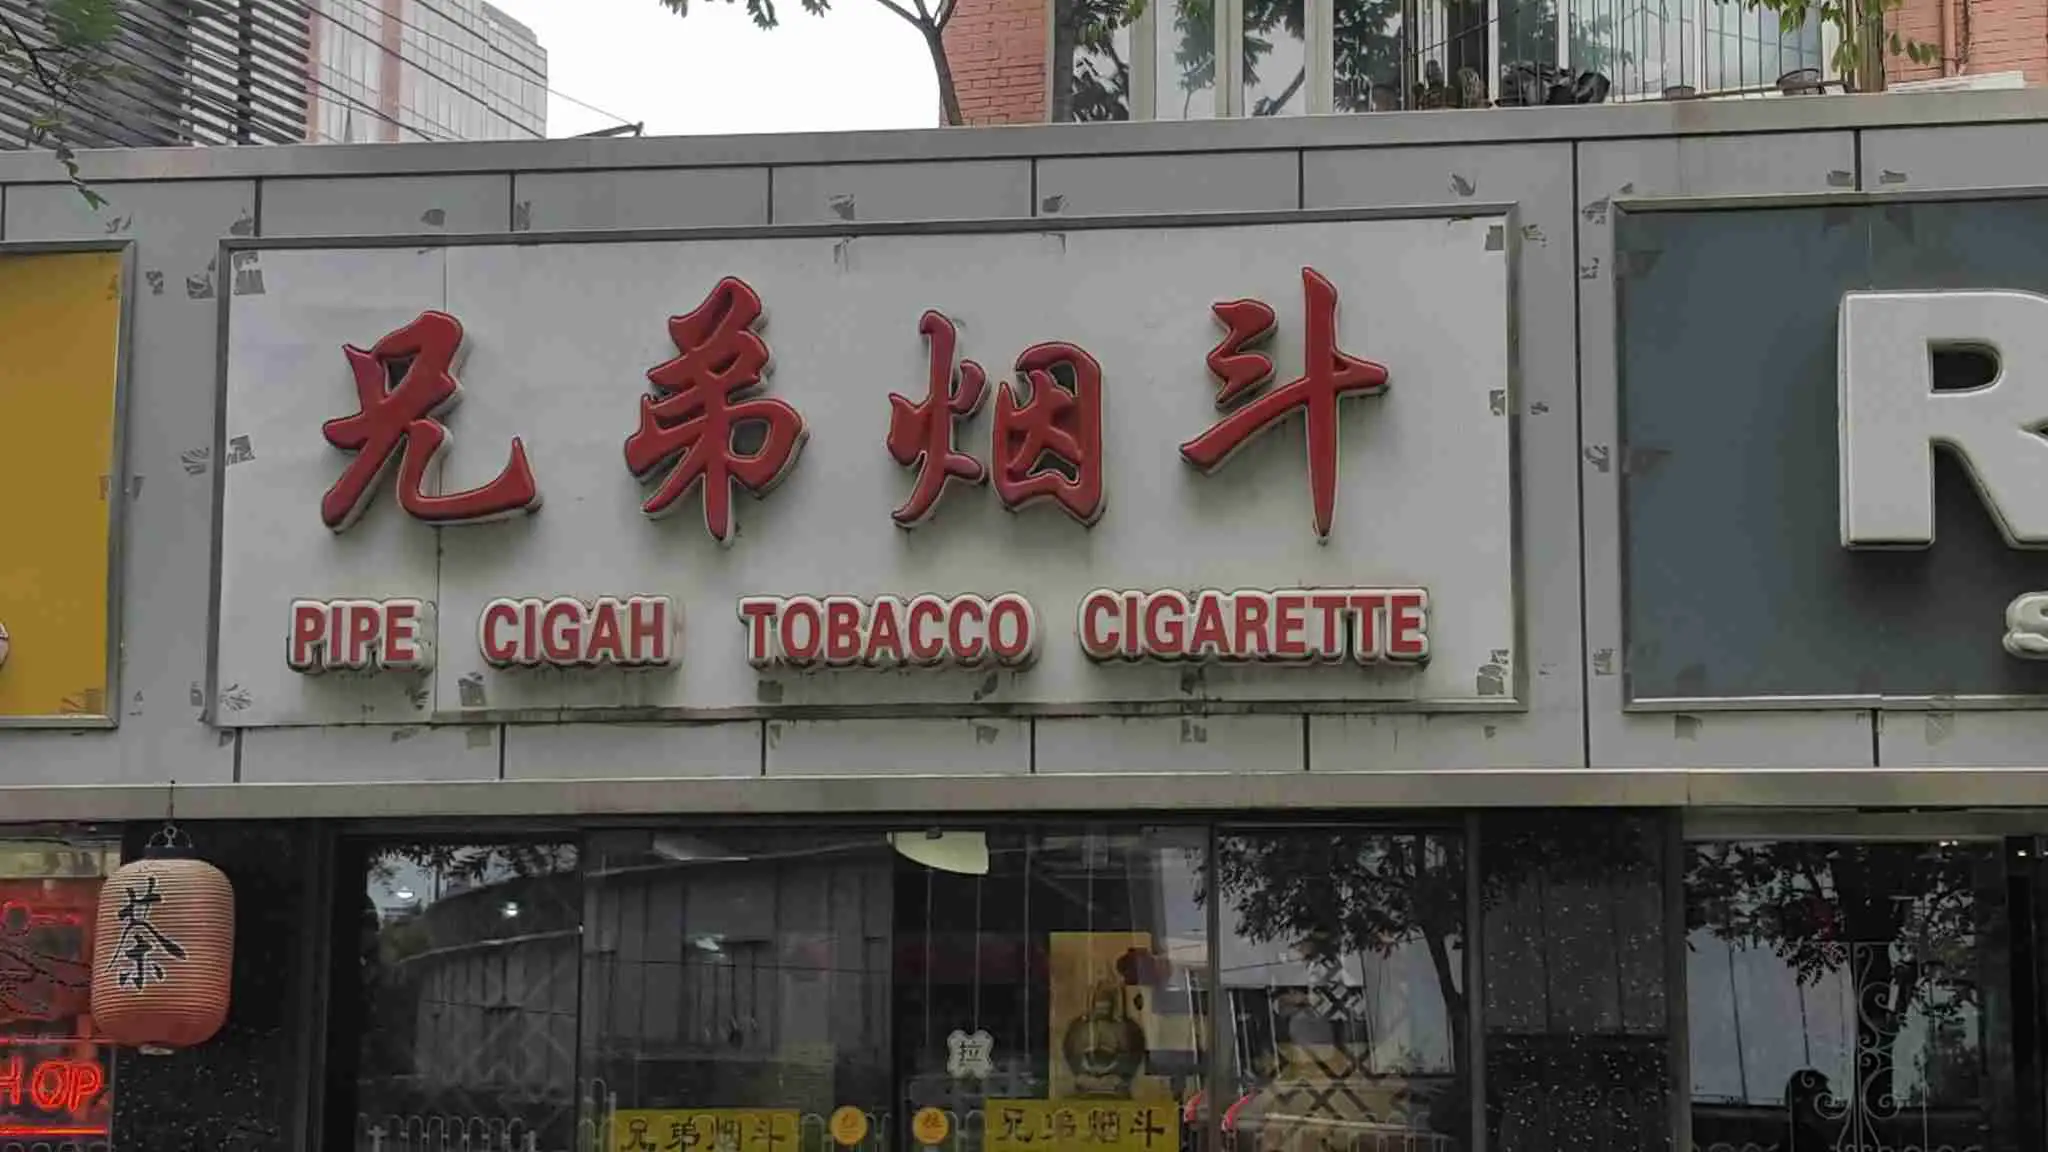 Cigar Smoking Fail | China Travel Blog | Translation Fails From China - Chingrish Time! | Chinglish, Chingrish, Translation Fails | Author: Anthony Bianco - The Travel Tart Blog